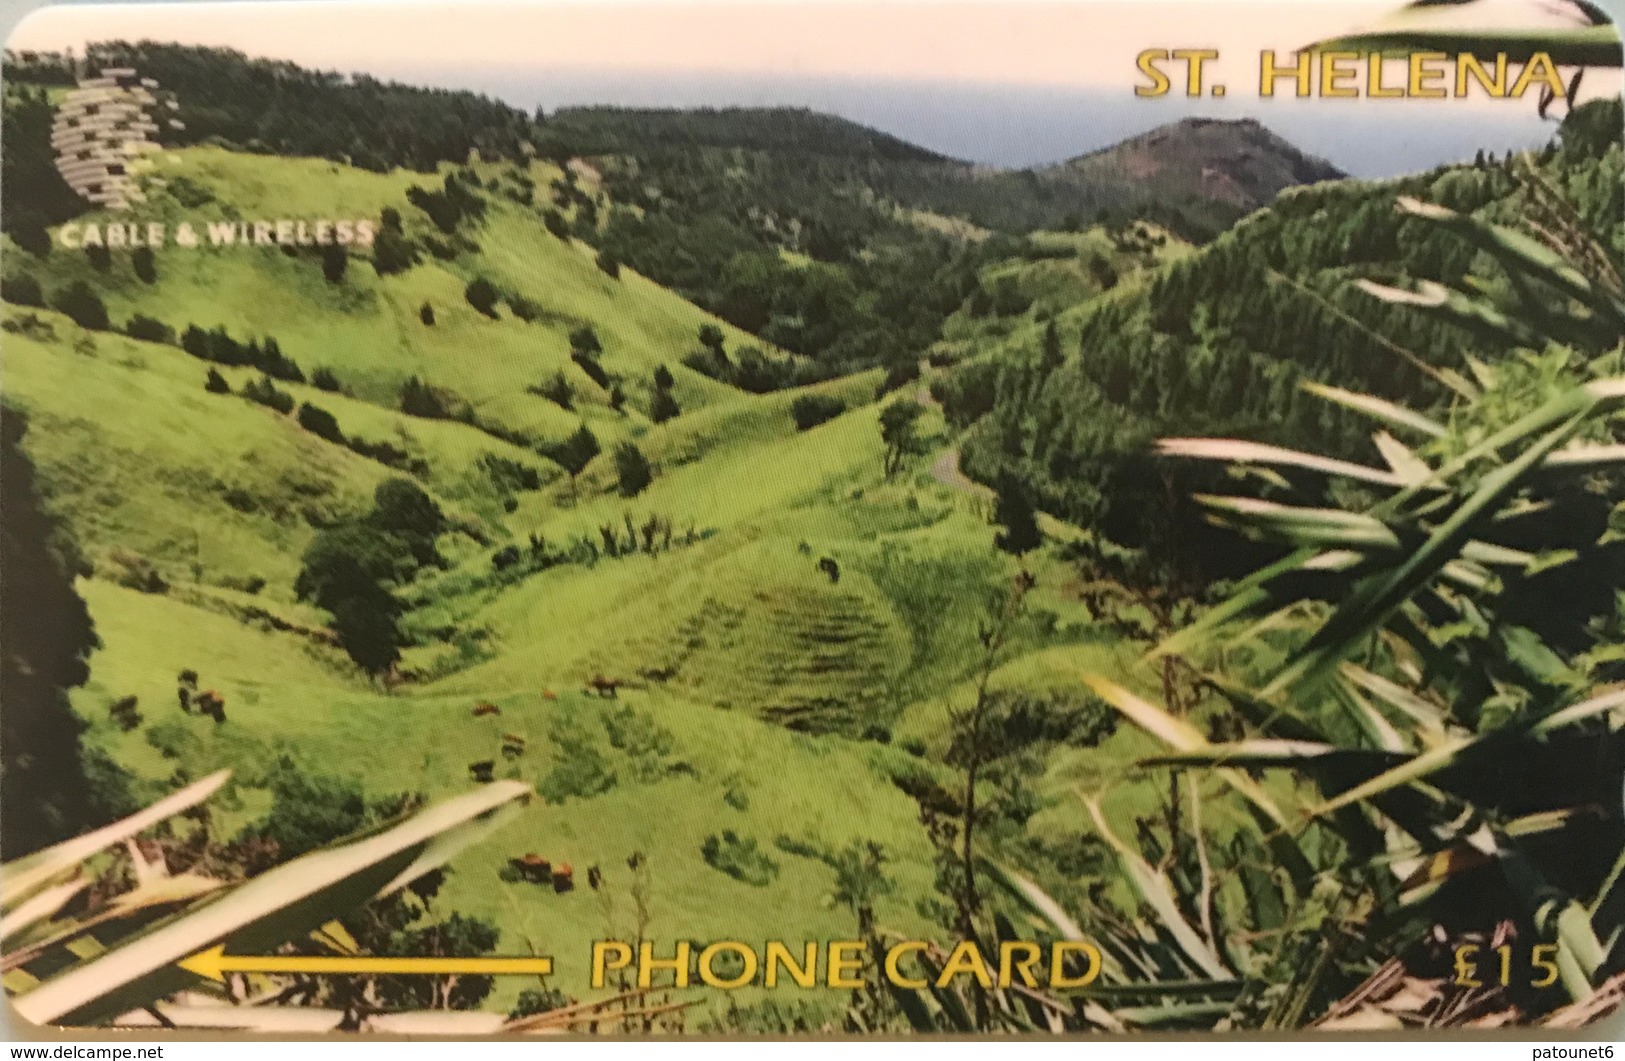 SAINTE-HELENE  -  Cable  § Wireless  -  " Former Governor "  -  £15,00 - St. Helena